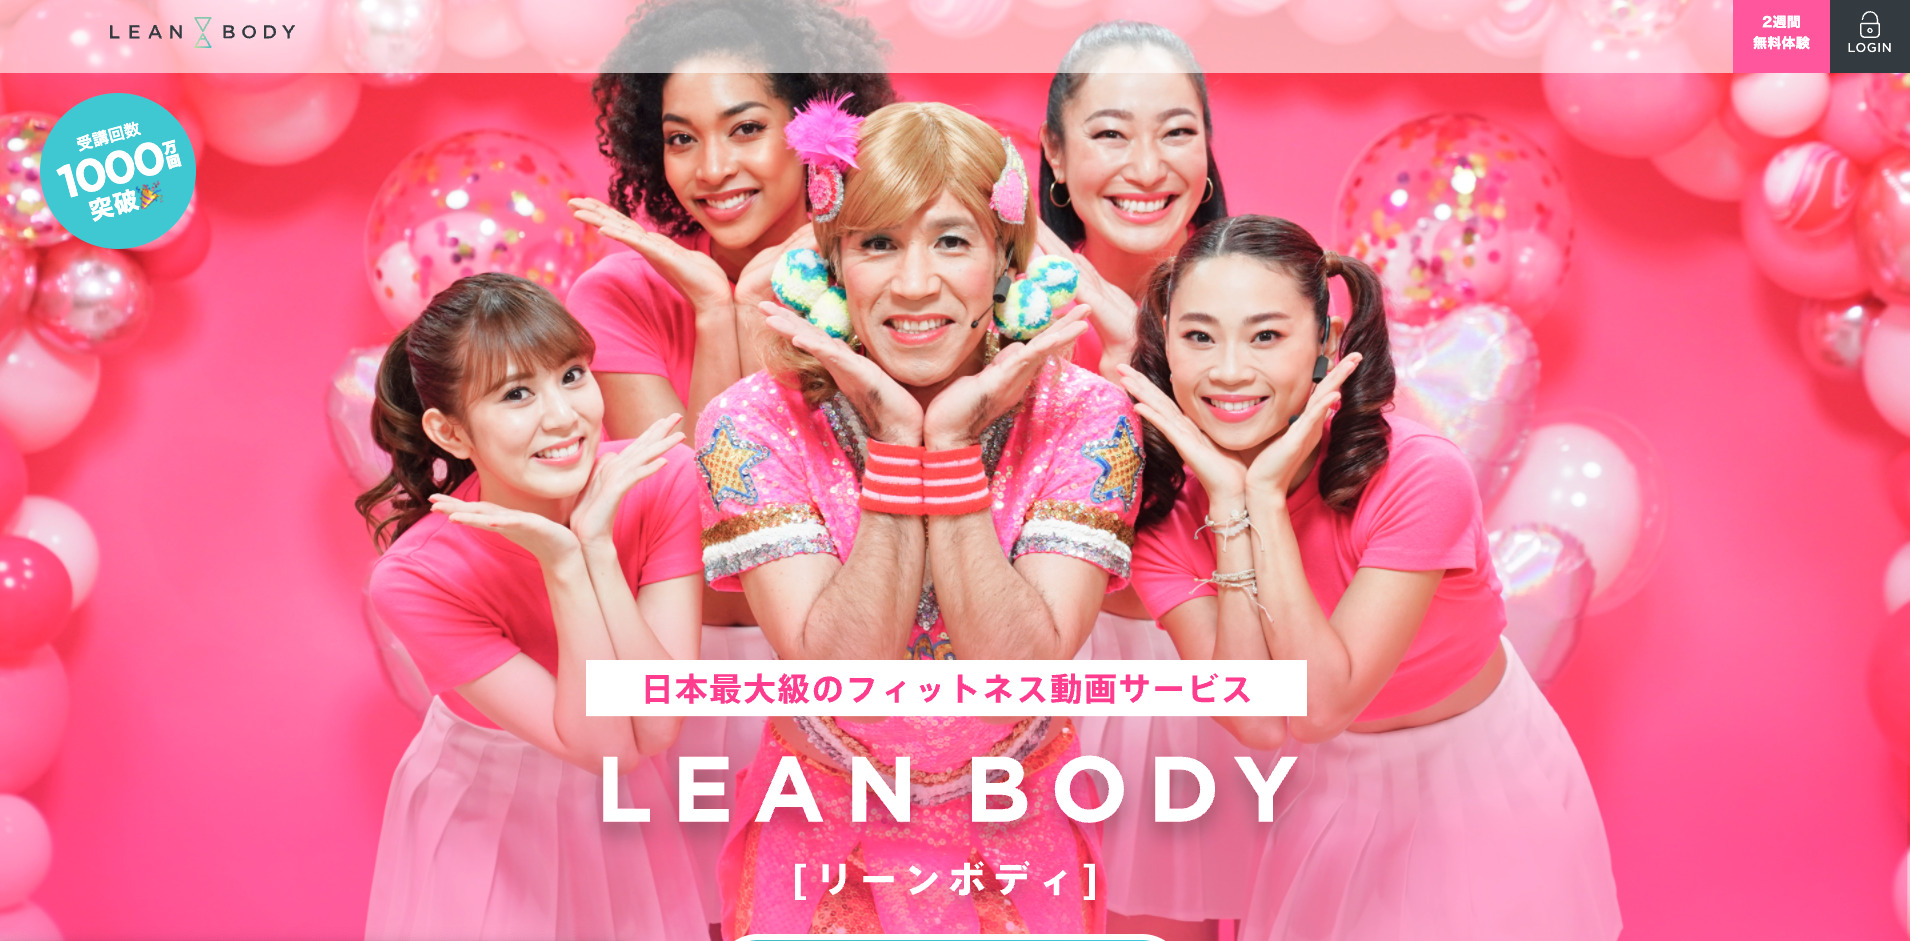 lean body